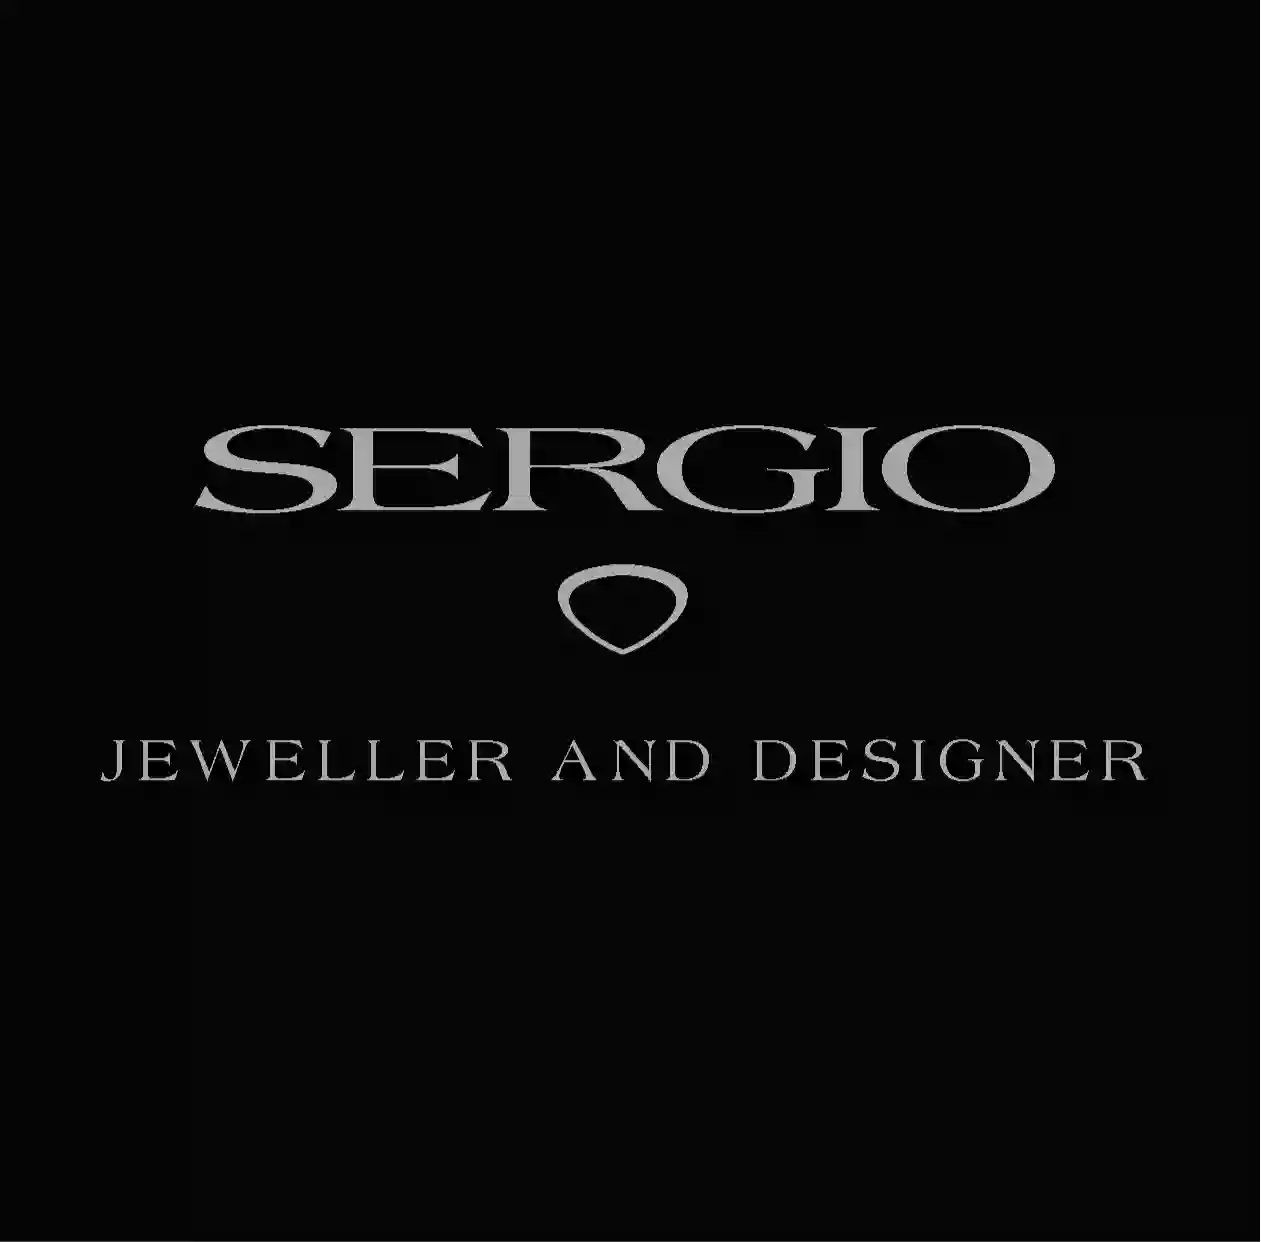 Sergio Jeweller and Designer